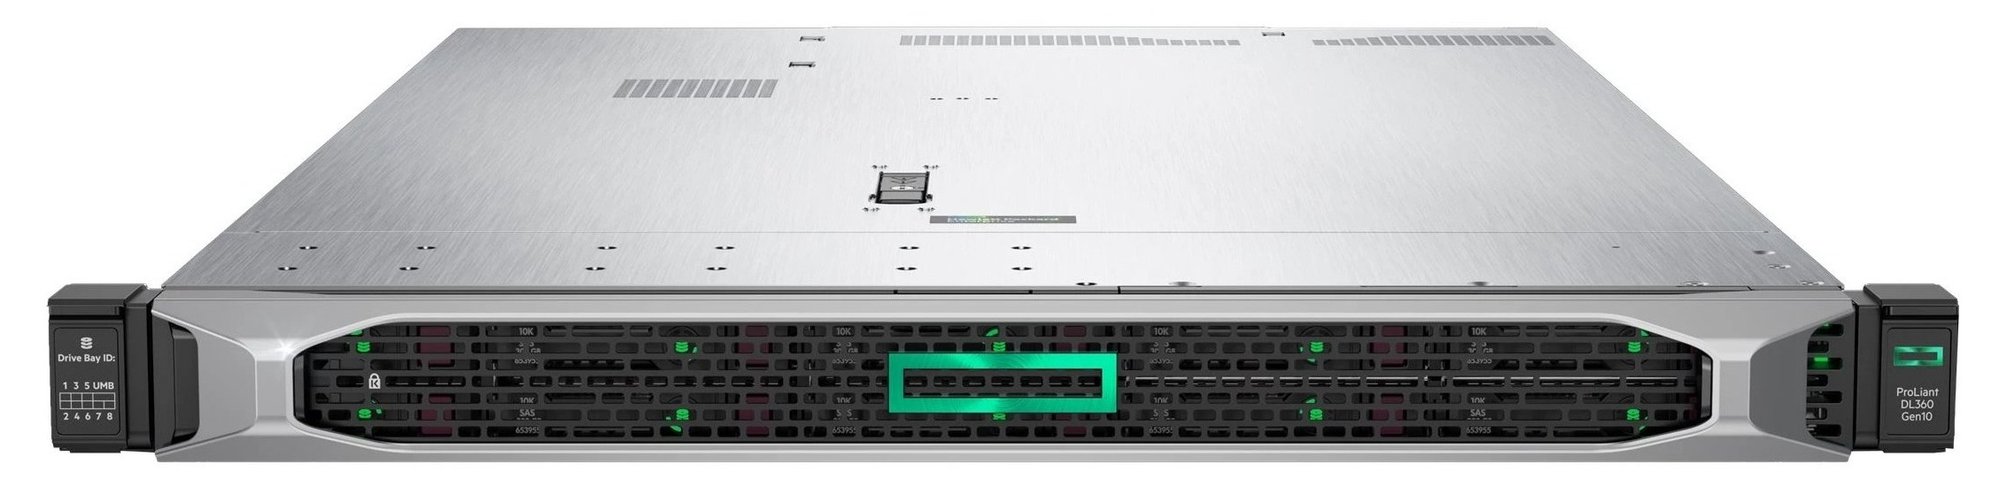 P40636-B21 | HPE Proliant Dl360 Gen10 Server - NEW